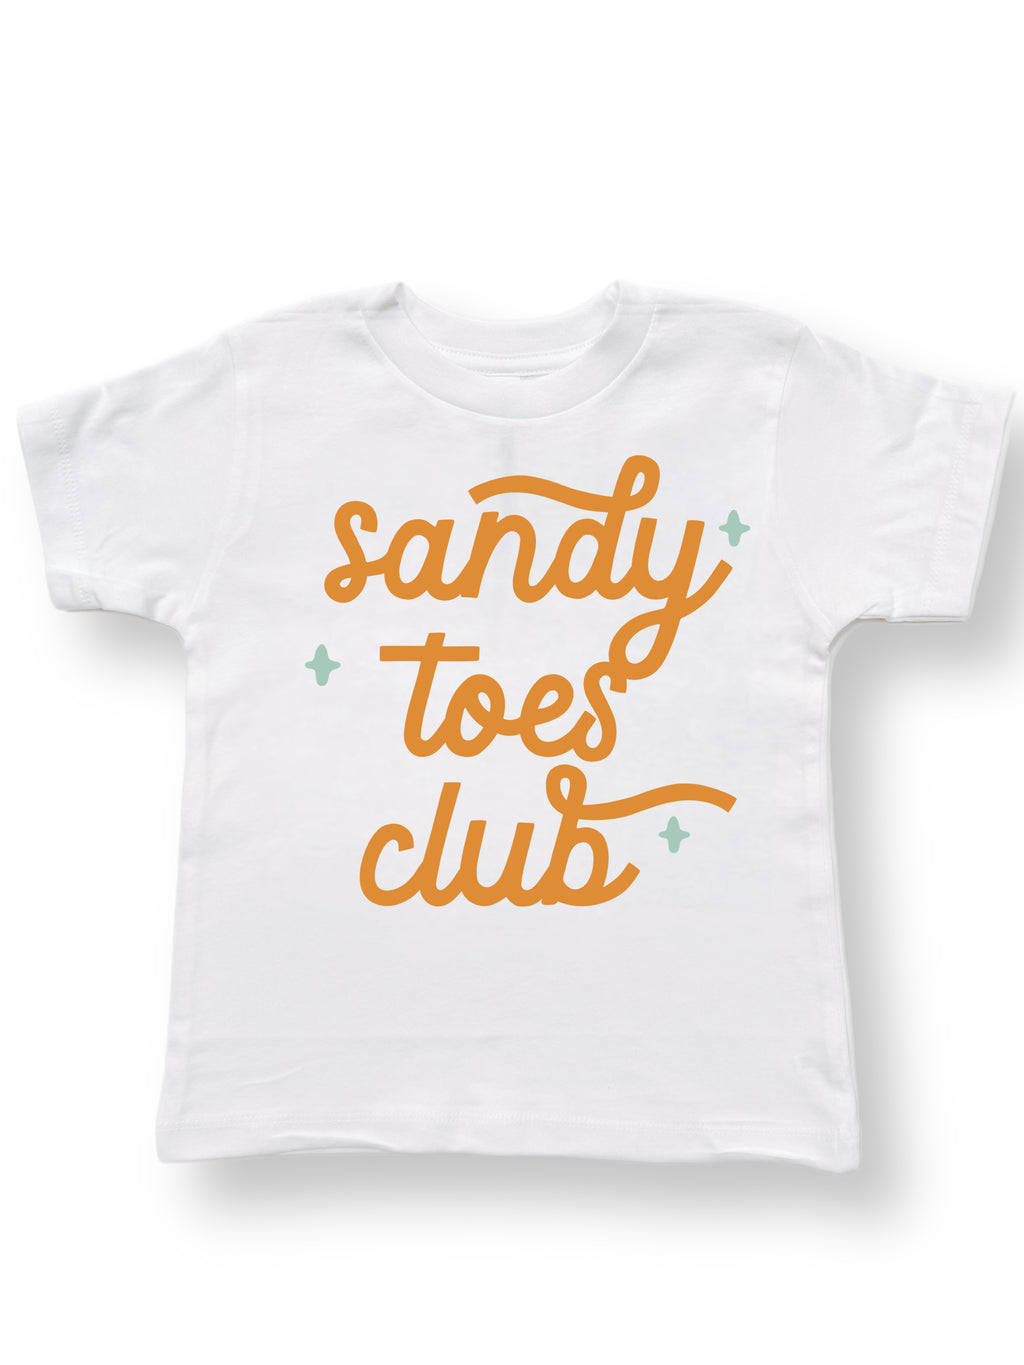 Sandy Toes Club Tee